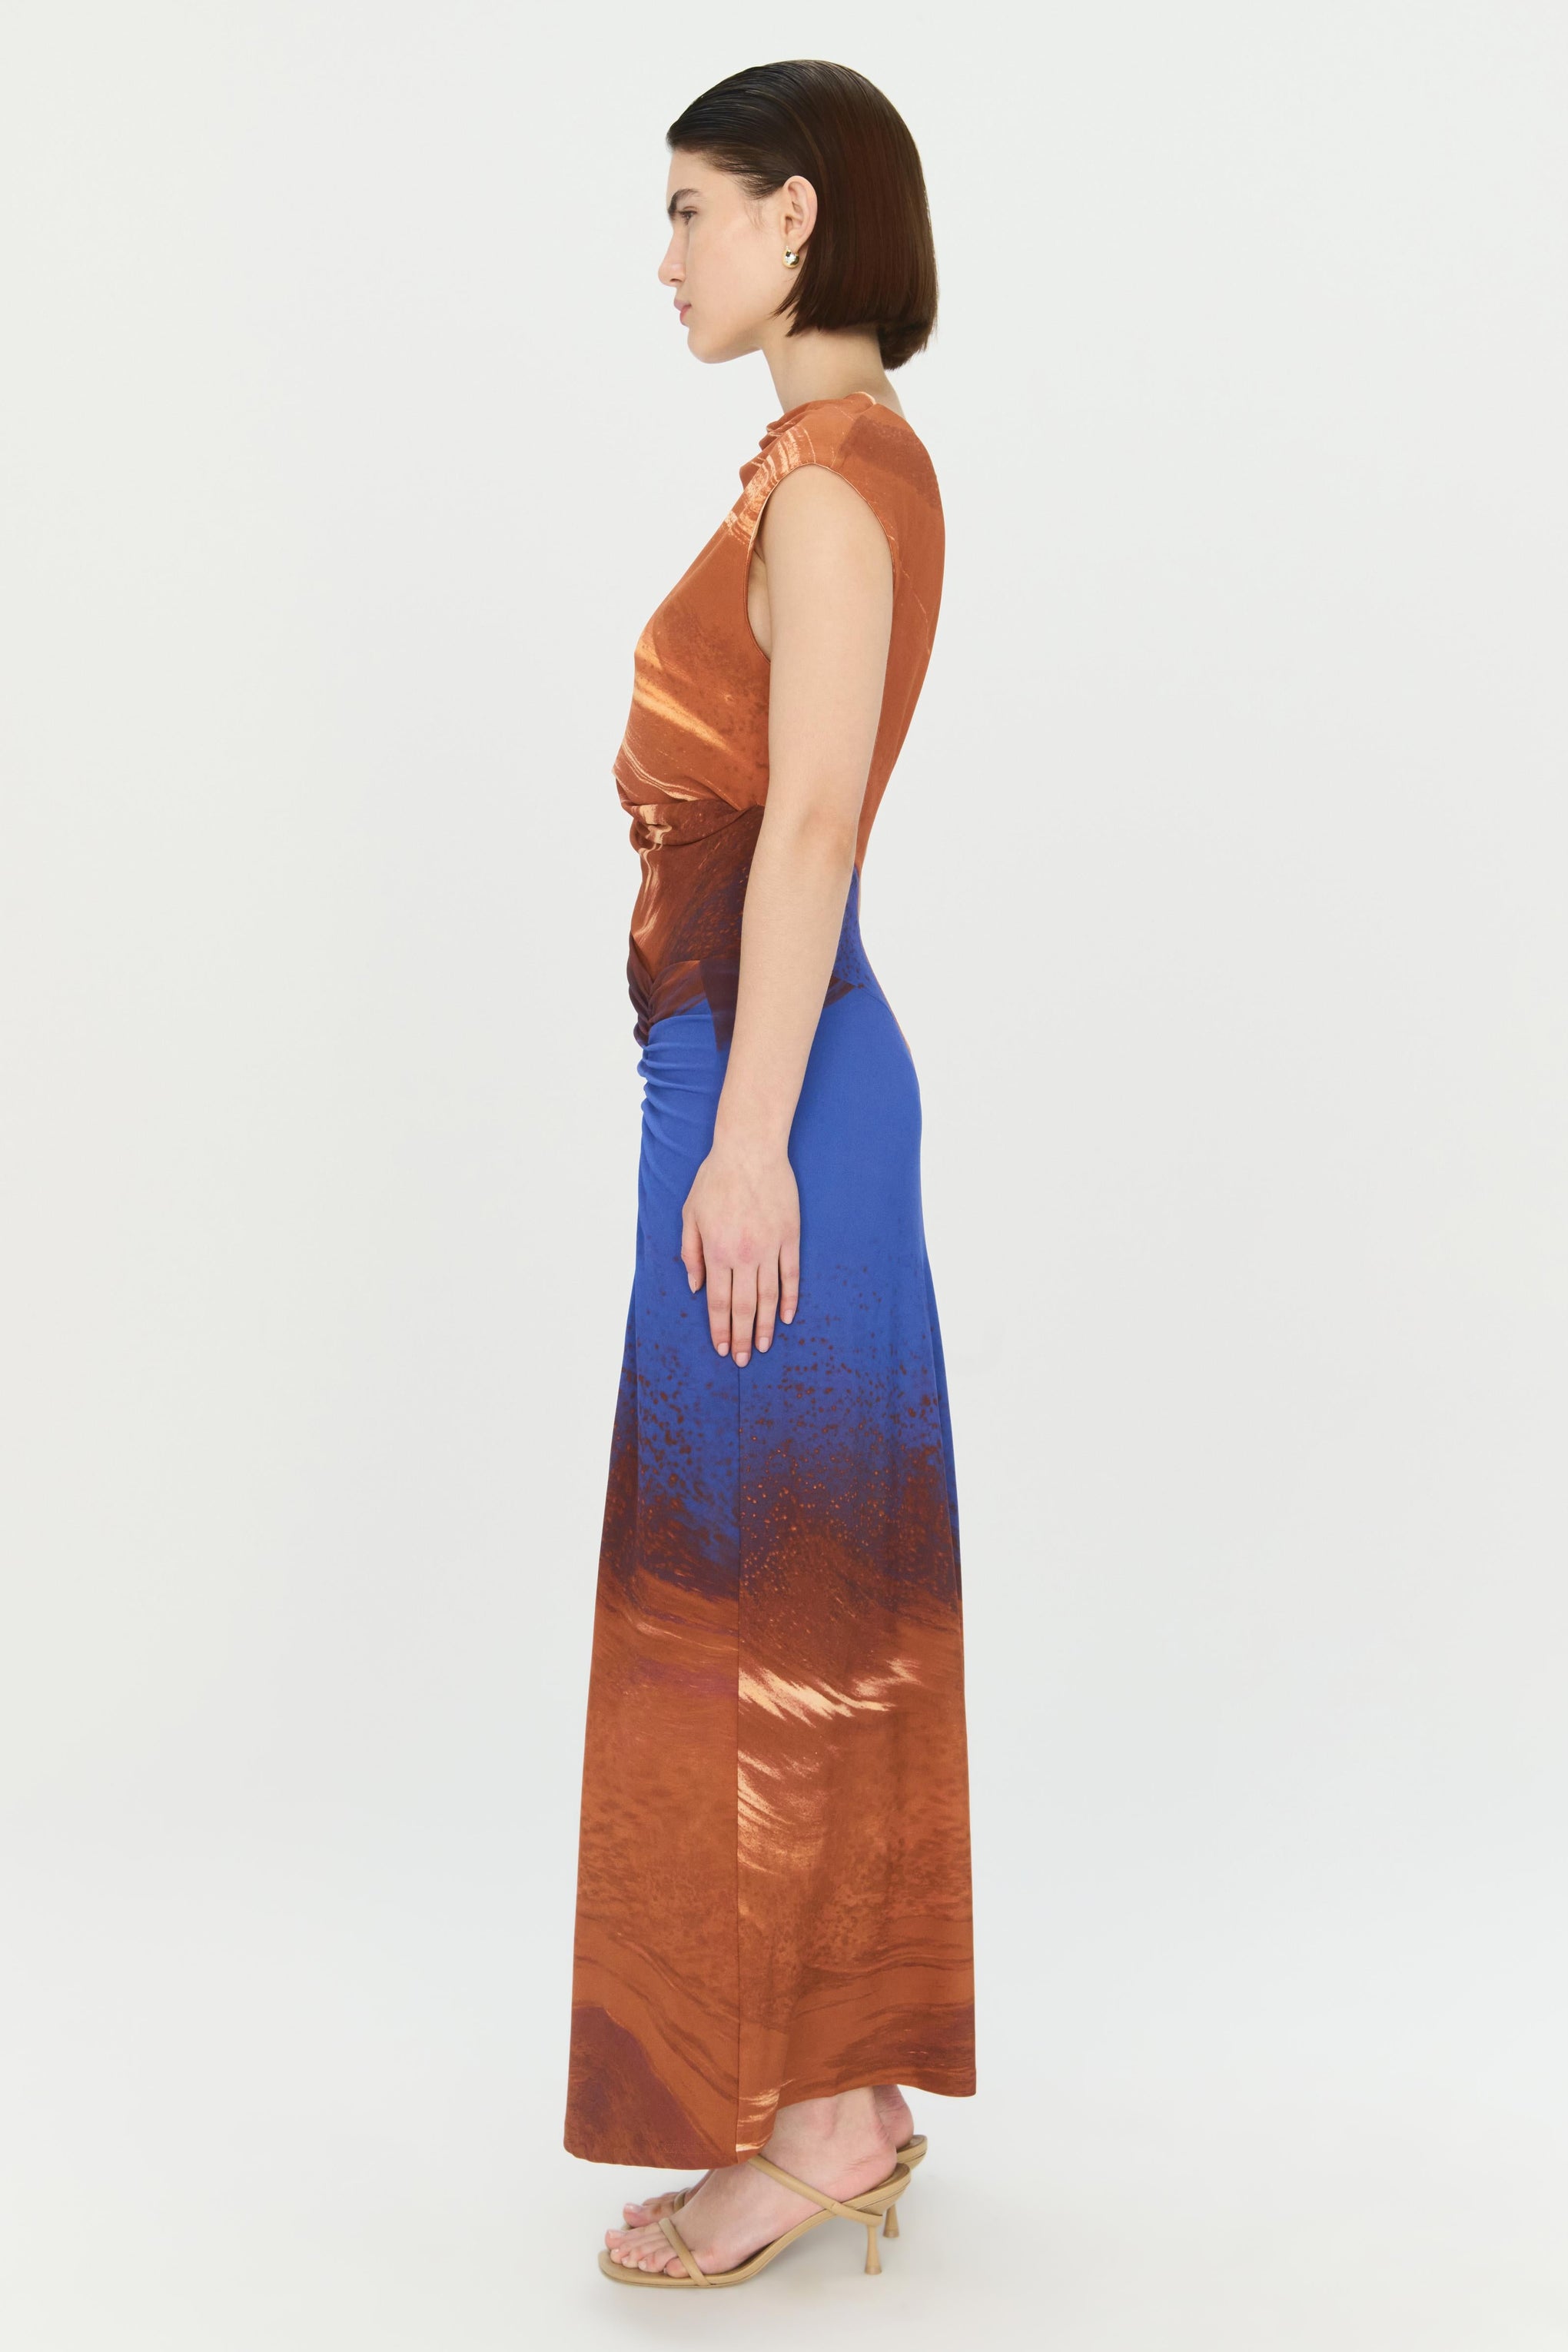 Jonathan Simkhai Acacia Midi Dress in Sierra Print available at The New Trend Australia